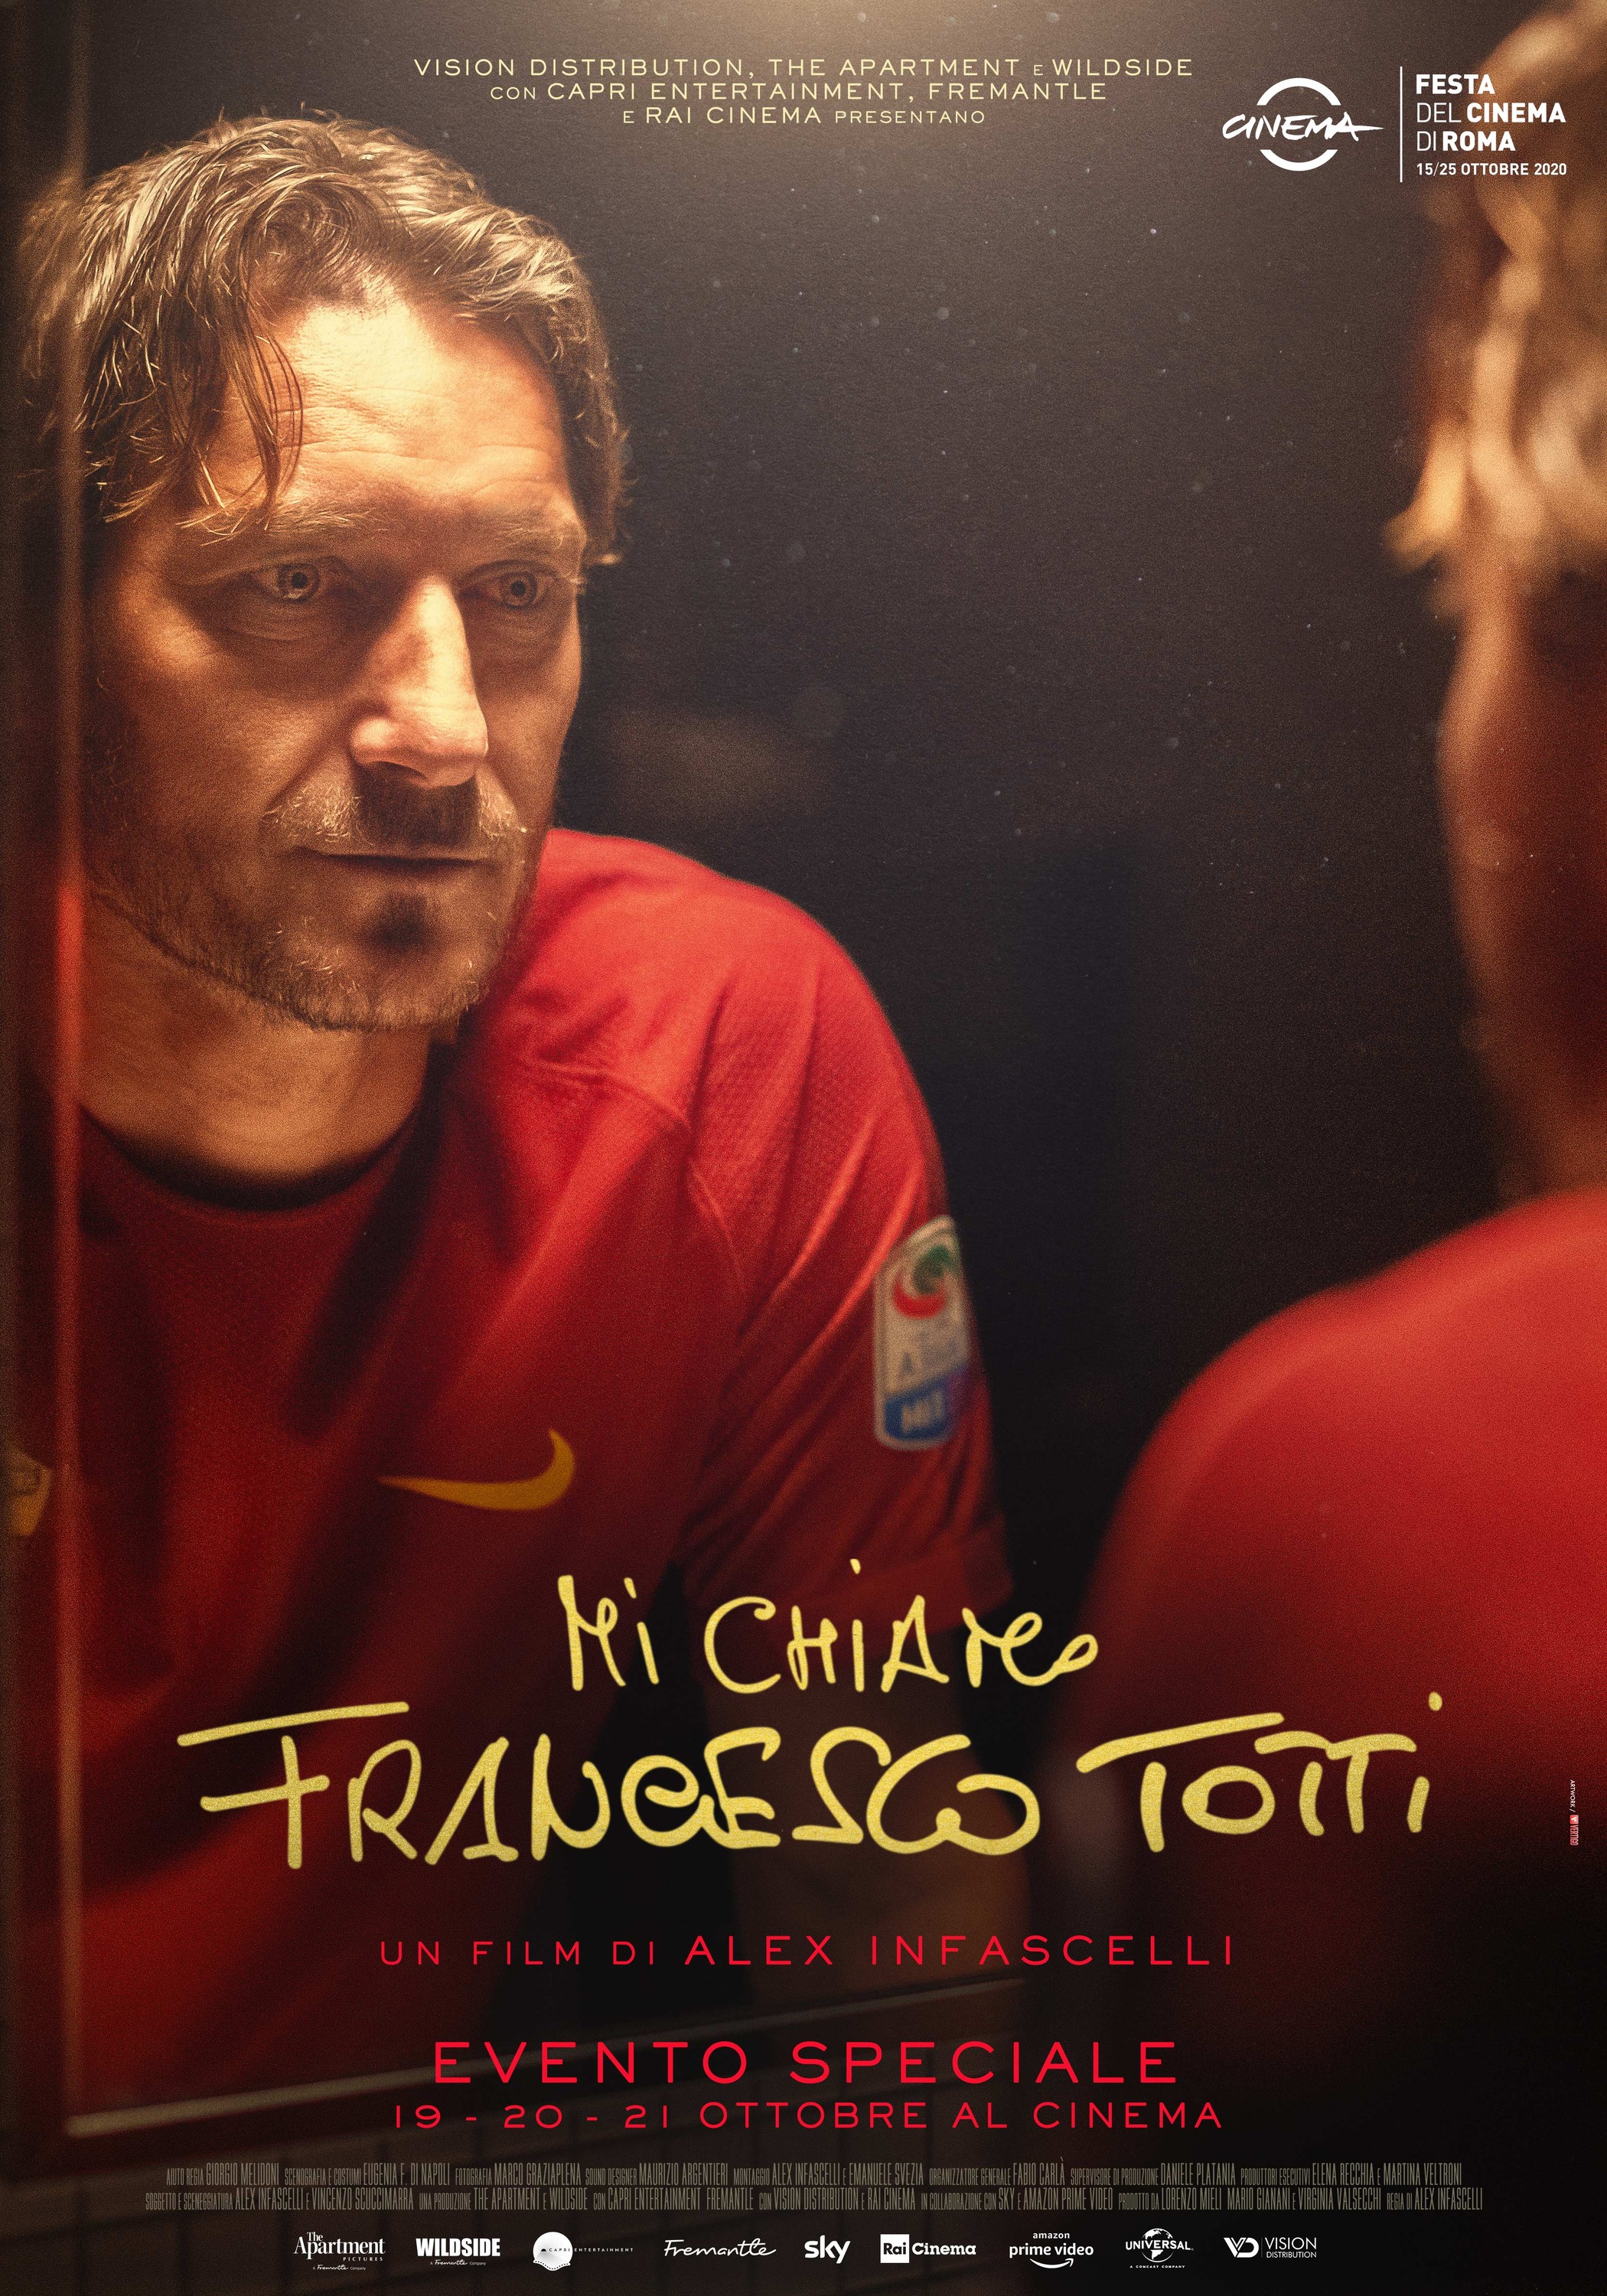 Mega Sized Movie Poster Image for Mi chiamo Francesco Totti 